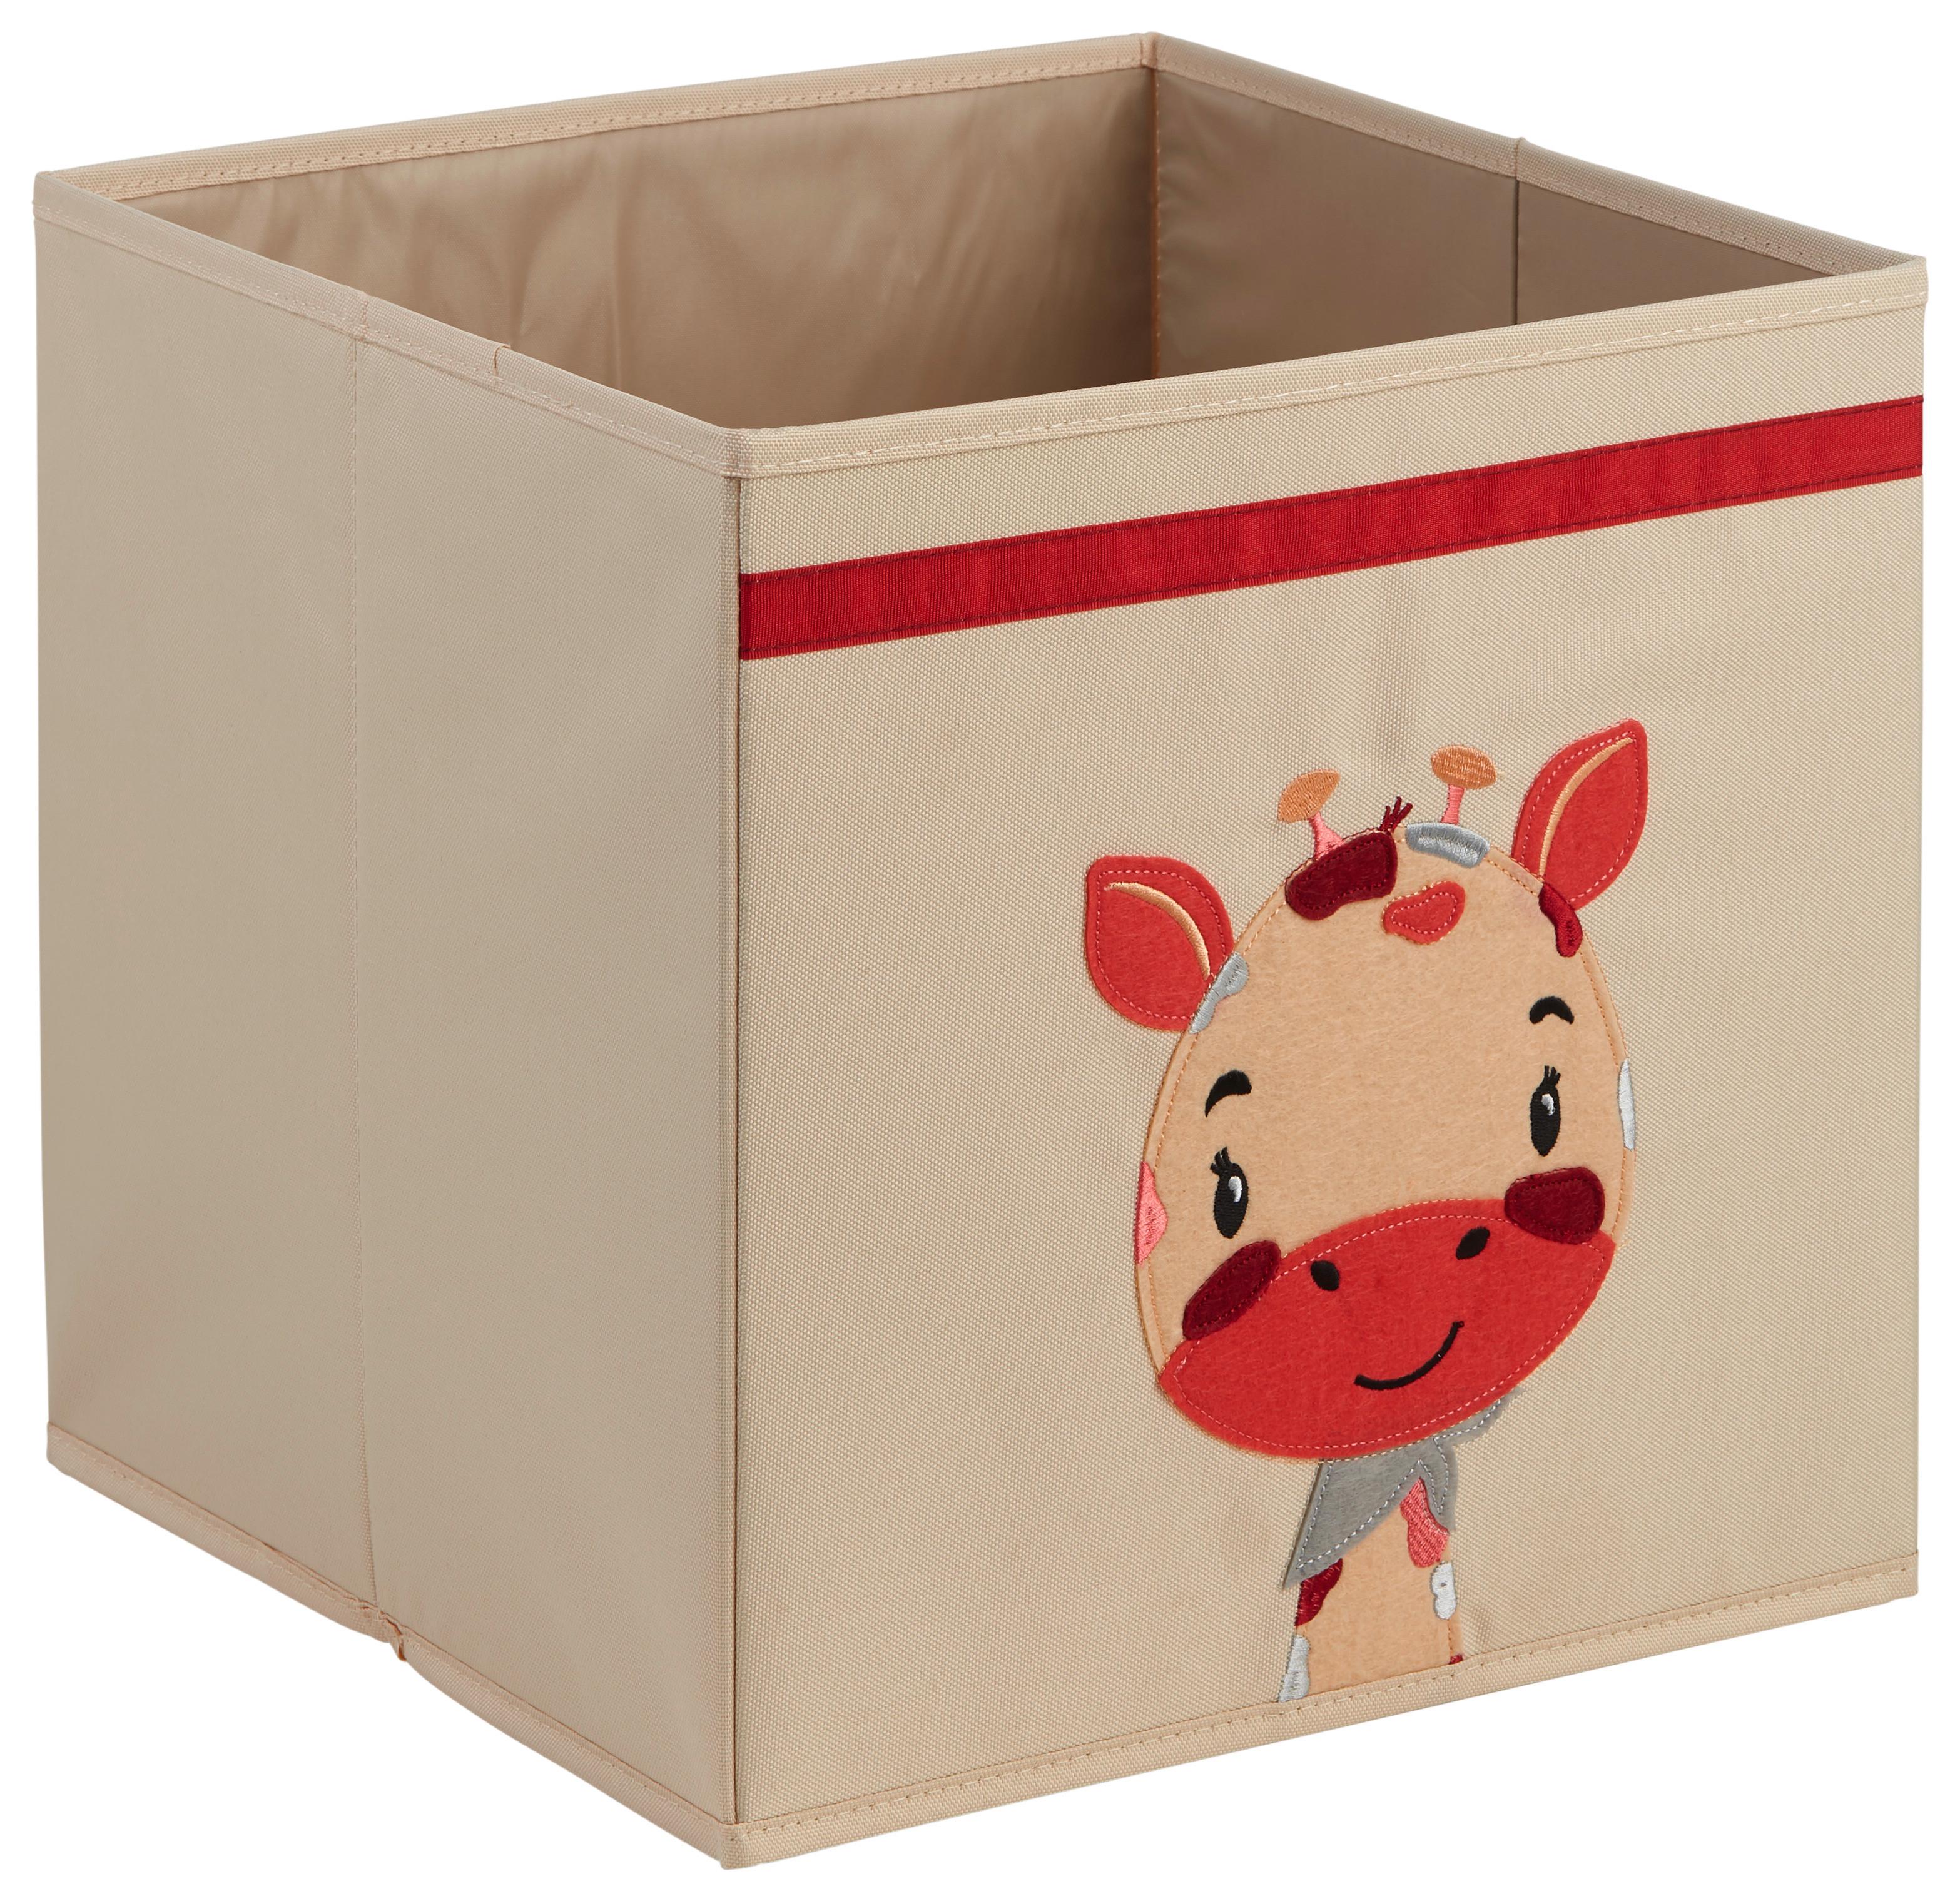 Skladací Box Peter - Ca. 34l -Ext- - krémová/červená, kartón/textil (33/32/33cm) - Modern Living